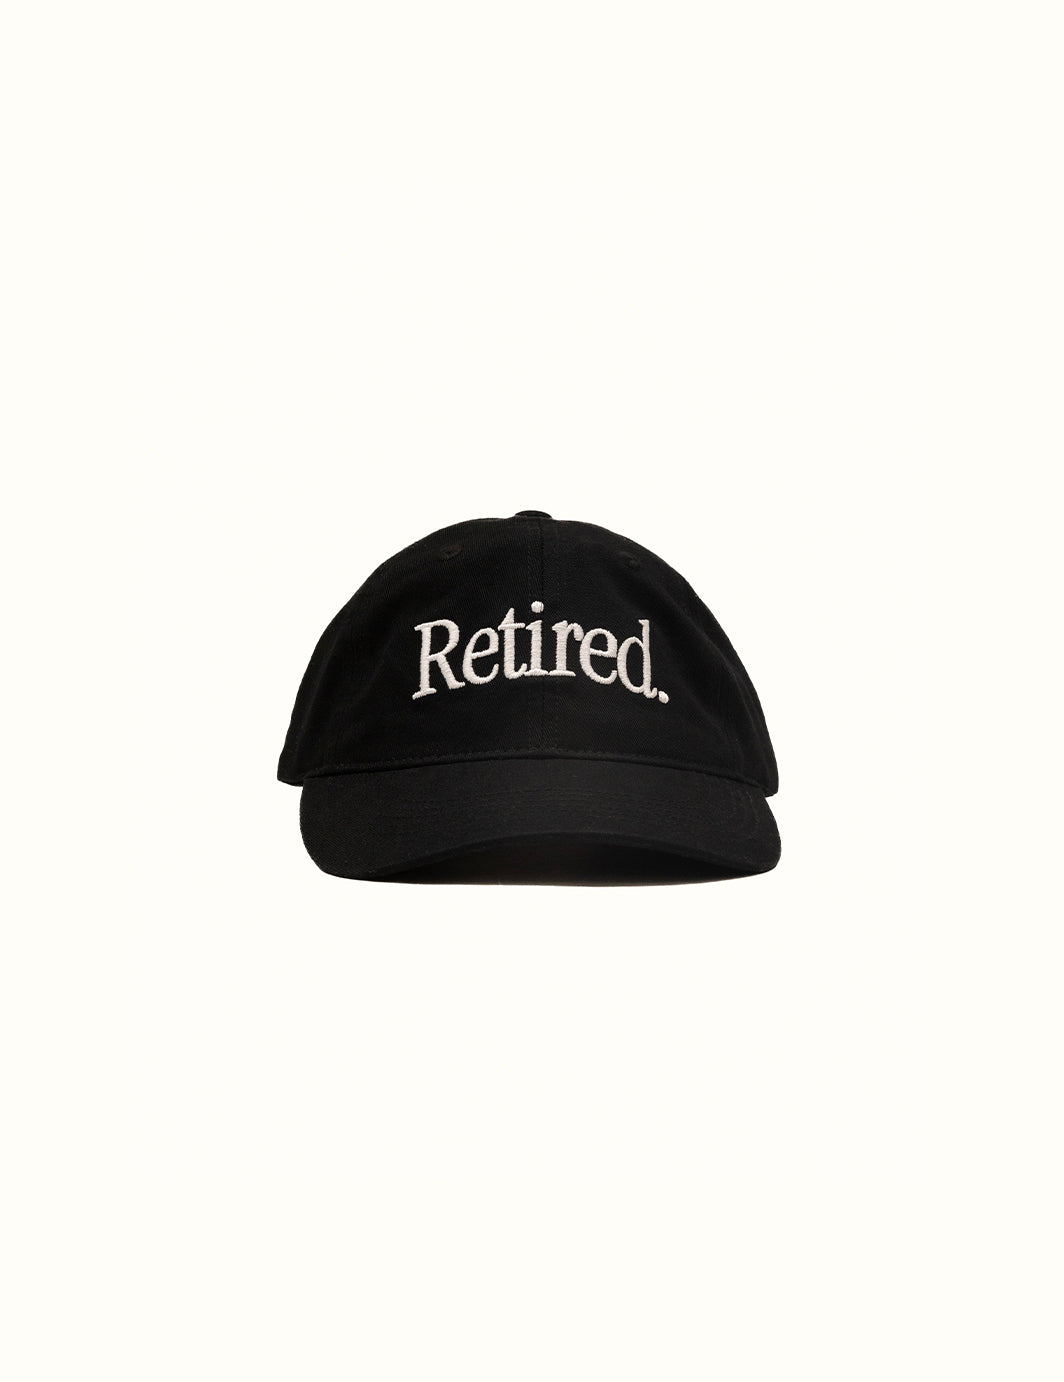 Retired Hat Black (SP 24)